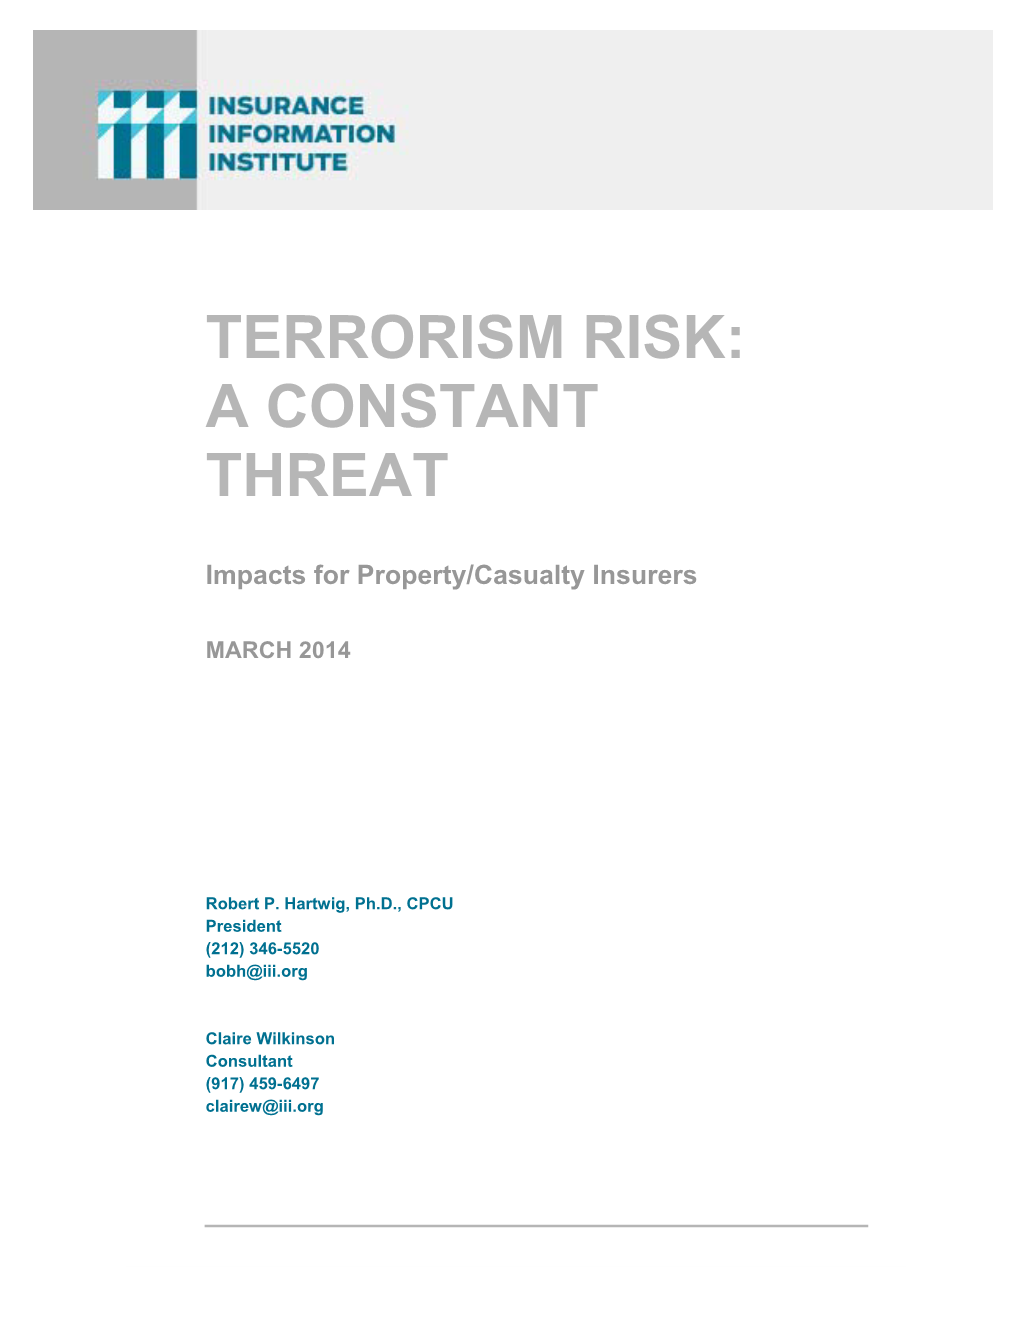 Terrorism Risk: a Constant Threat